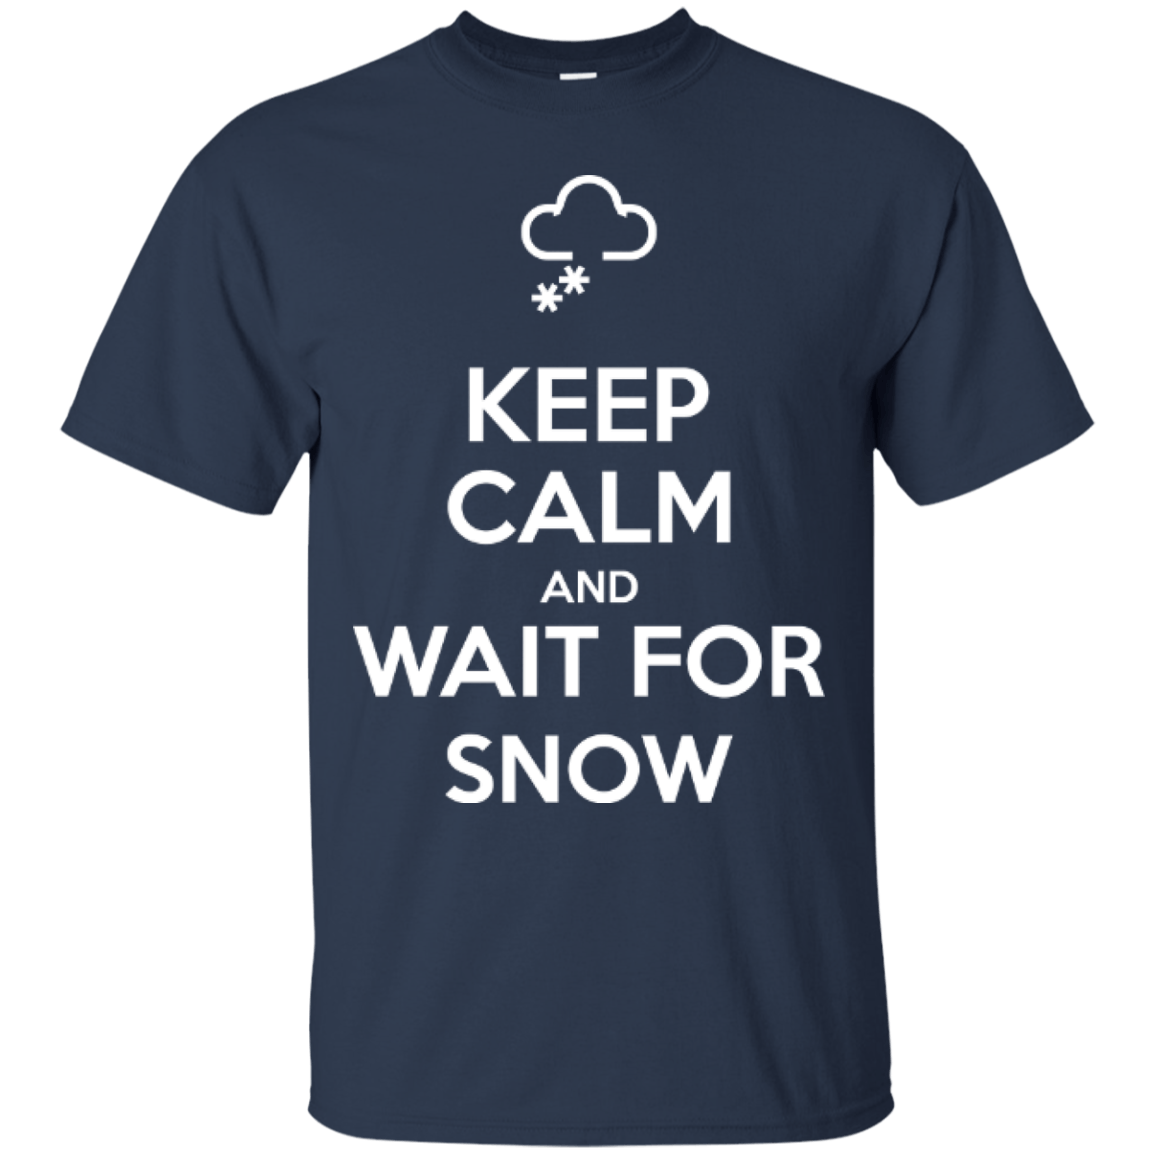 Keep Calm And Wait For Snow Tees - Powderaddicts